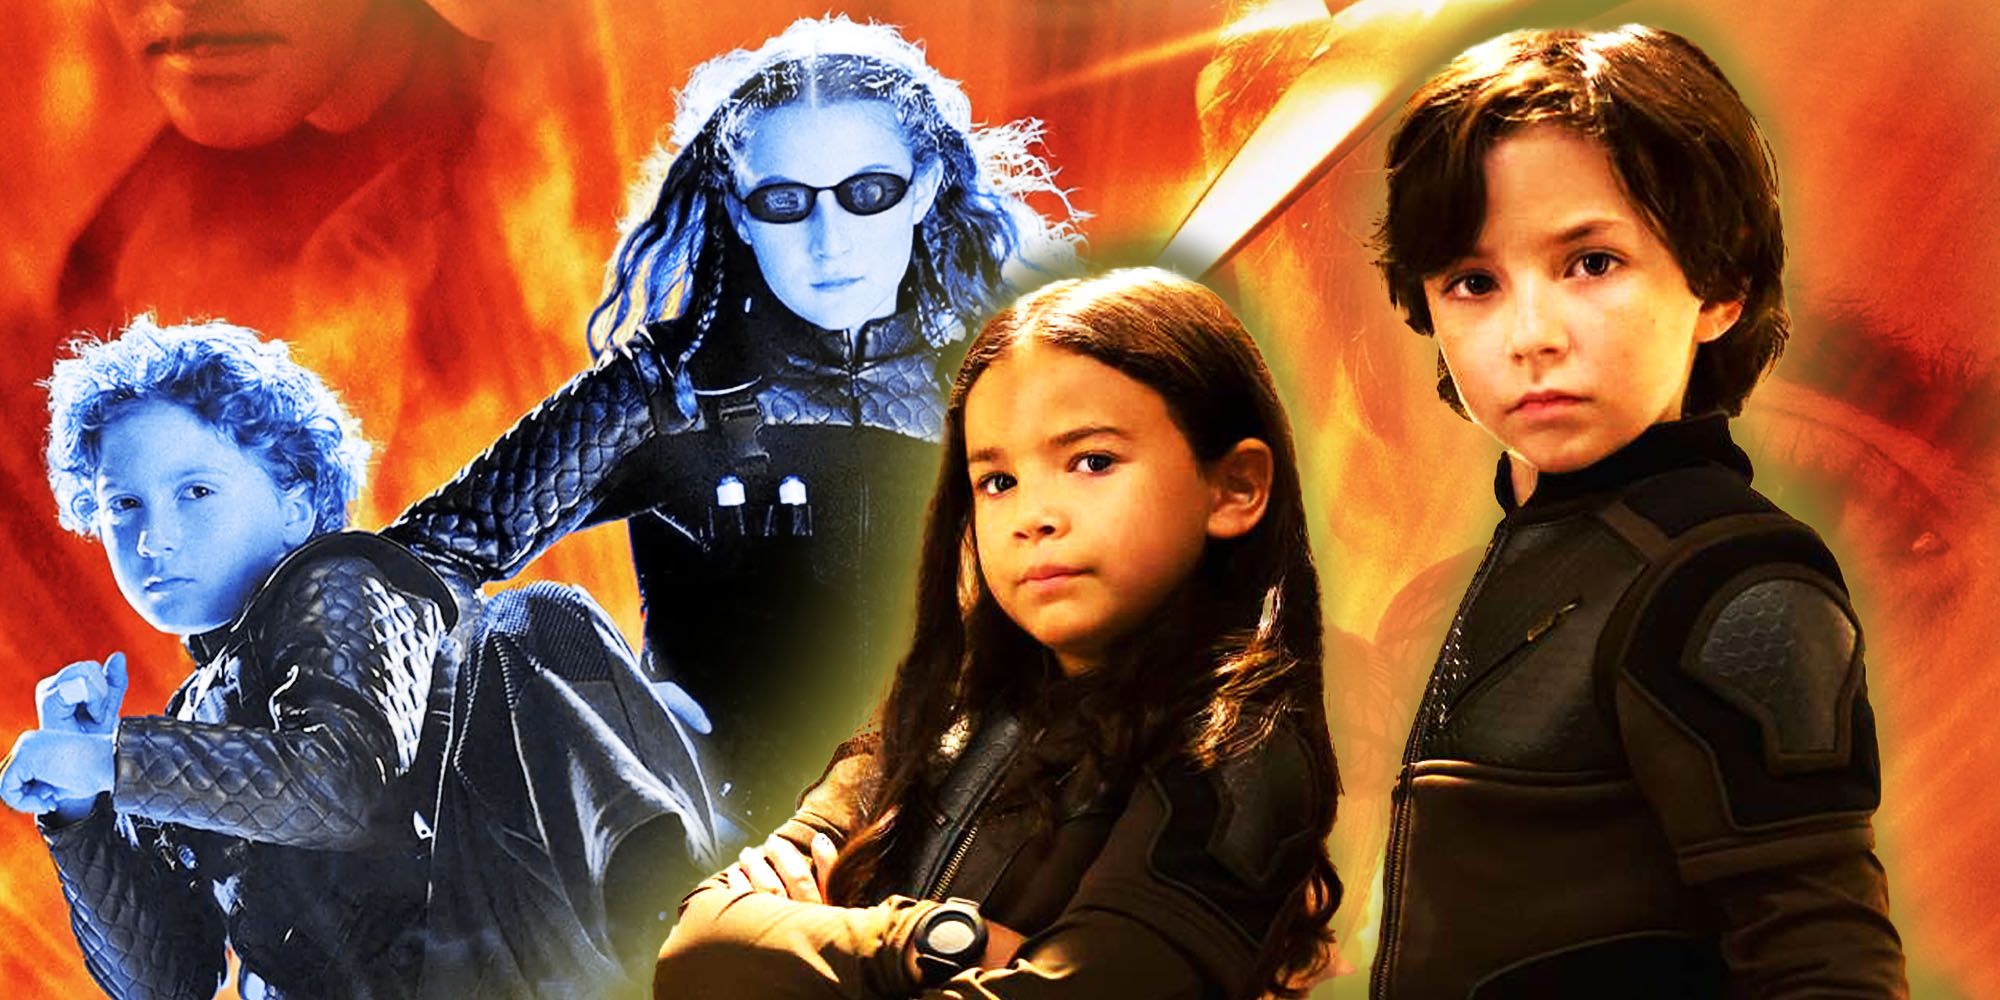 Juni and Carmen in Spy Kids with Netflix's new Spy Kids: Armageddon actors